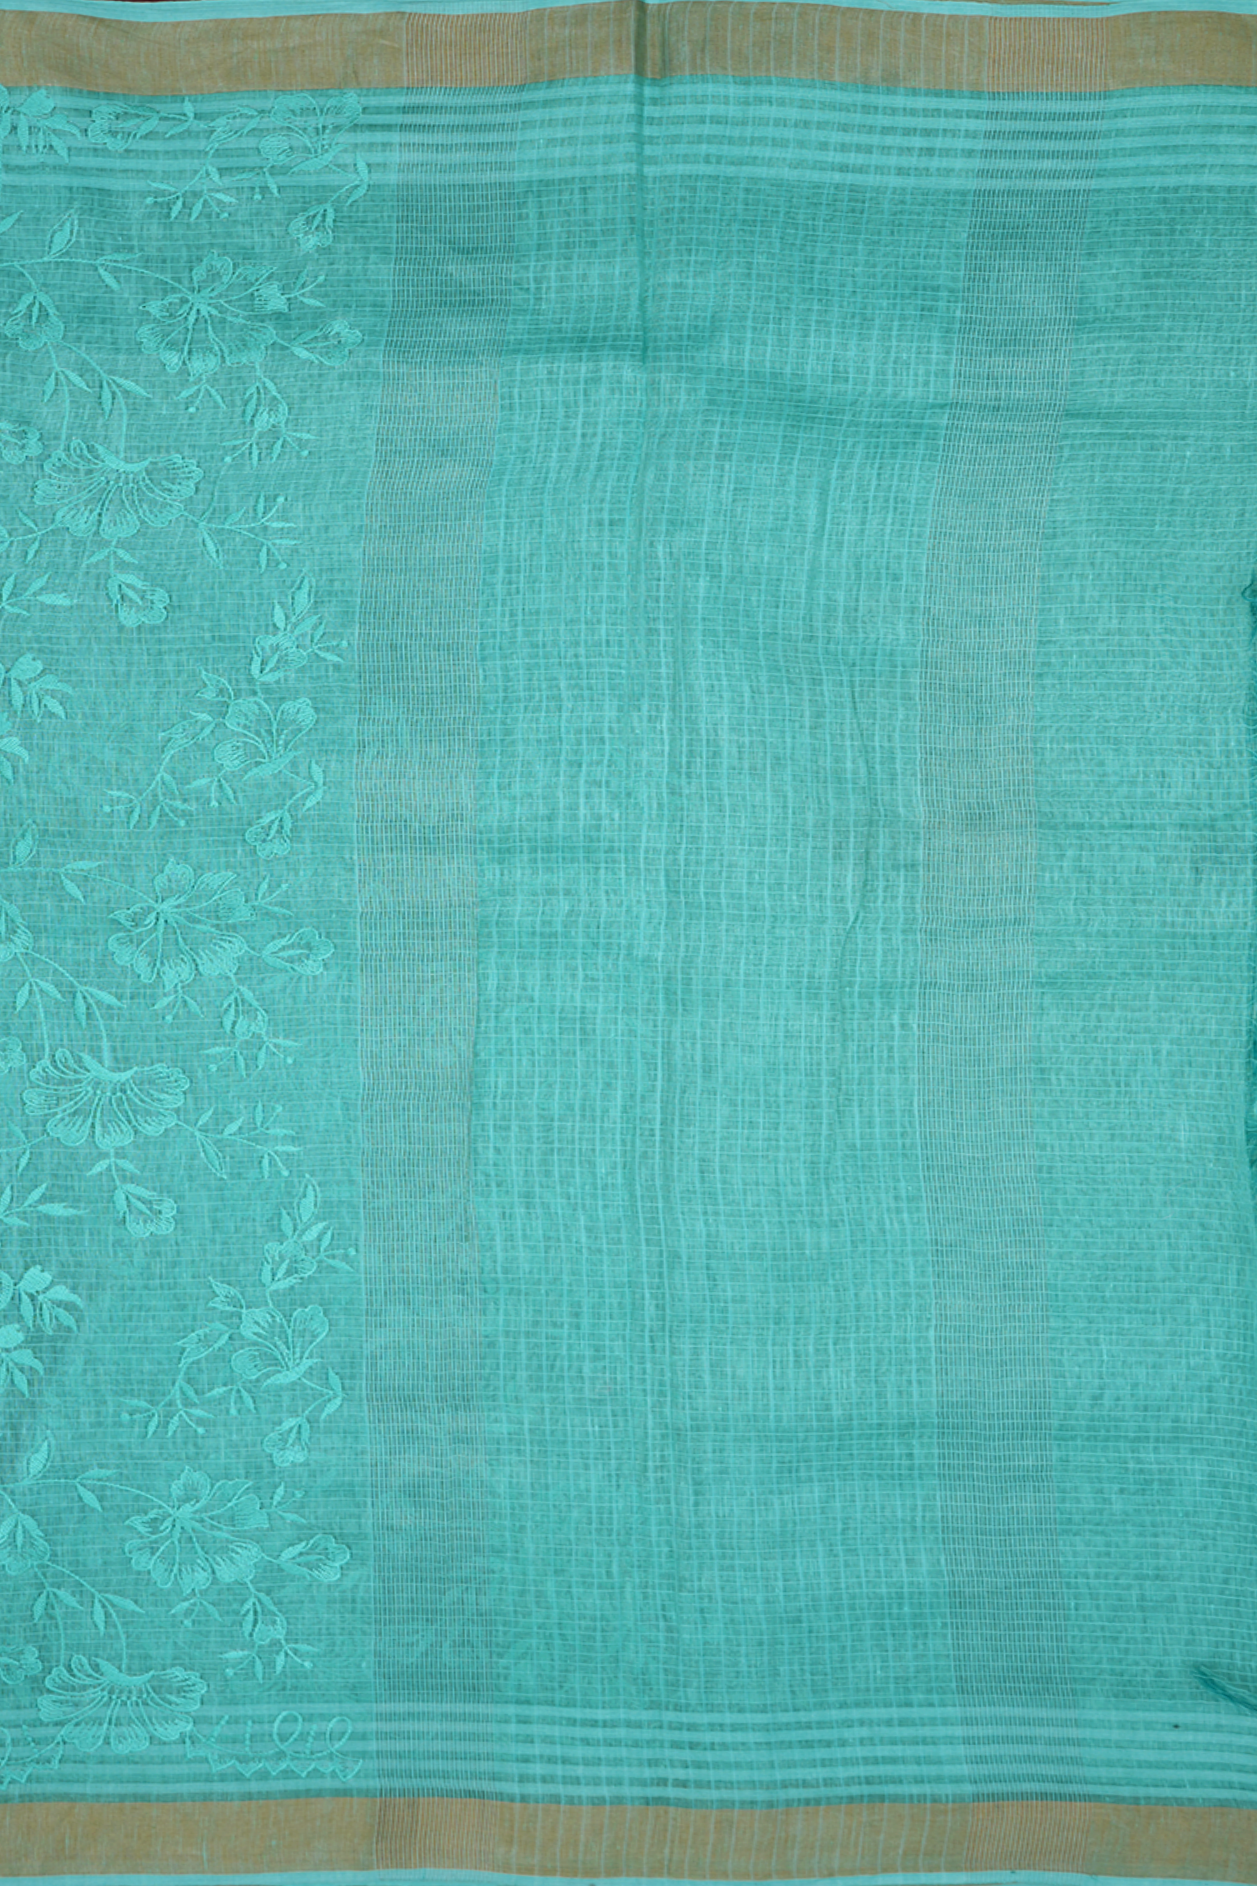 Embroidered Design Sea Green Linen Saree